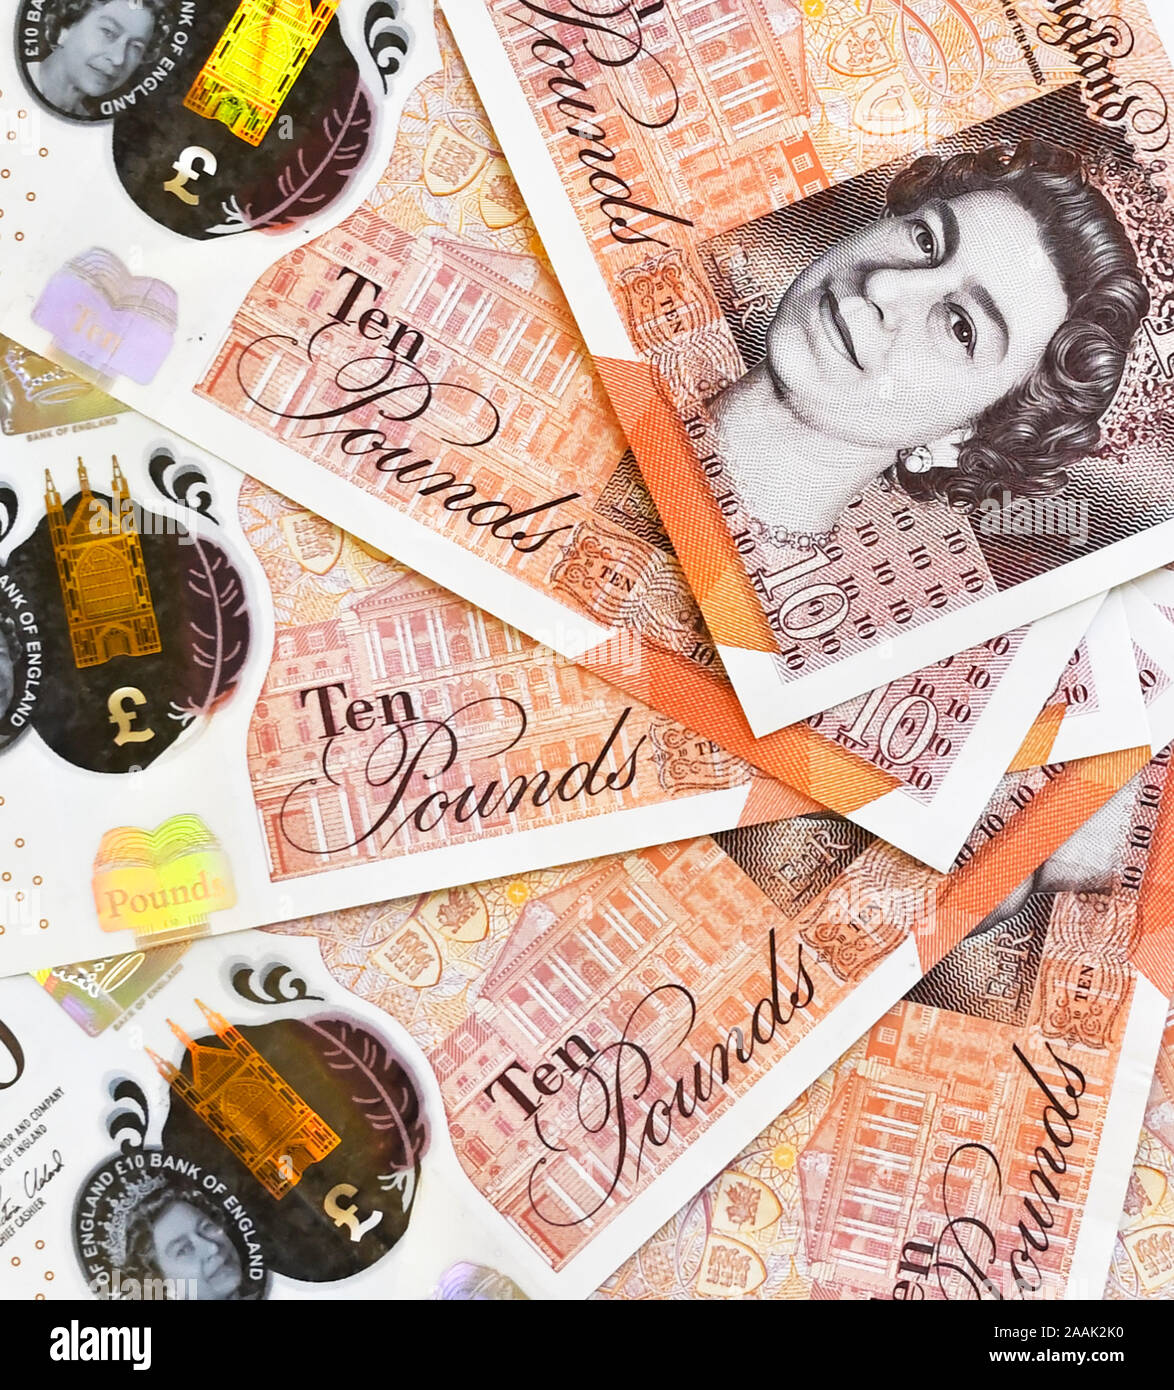 Bank of England £10 notes Stock Photo - Alamy